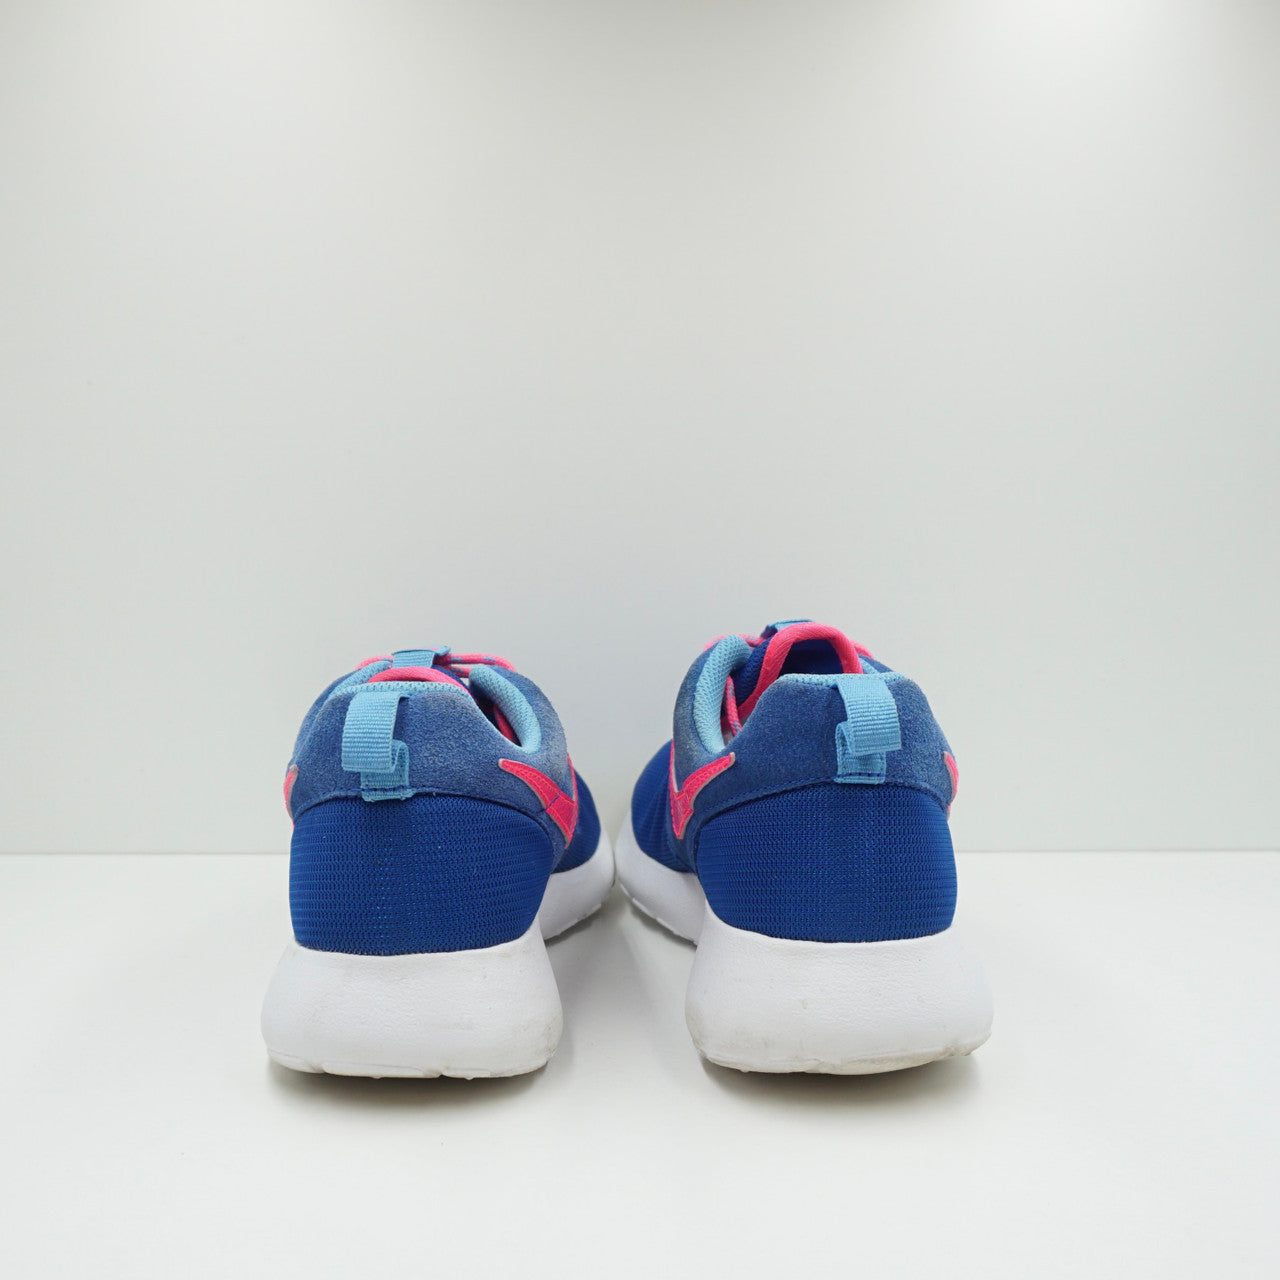 Nike Roshe Run Blue Pink (GS)